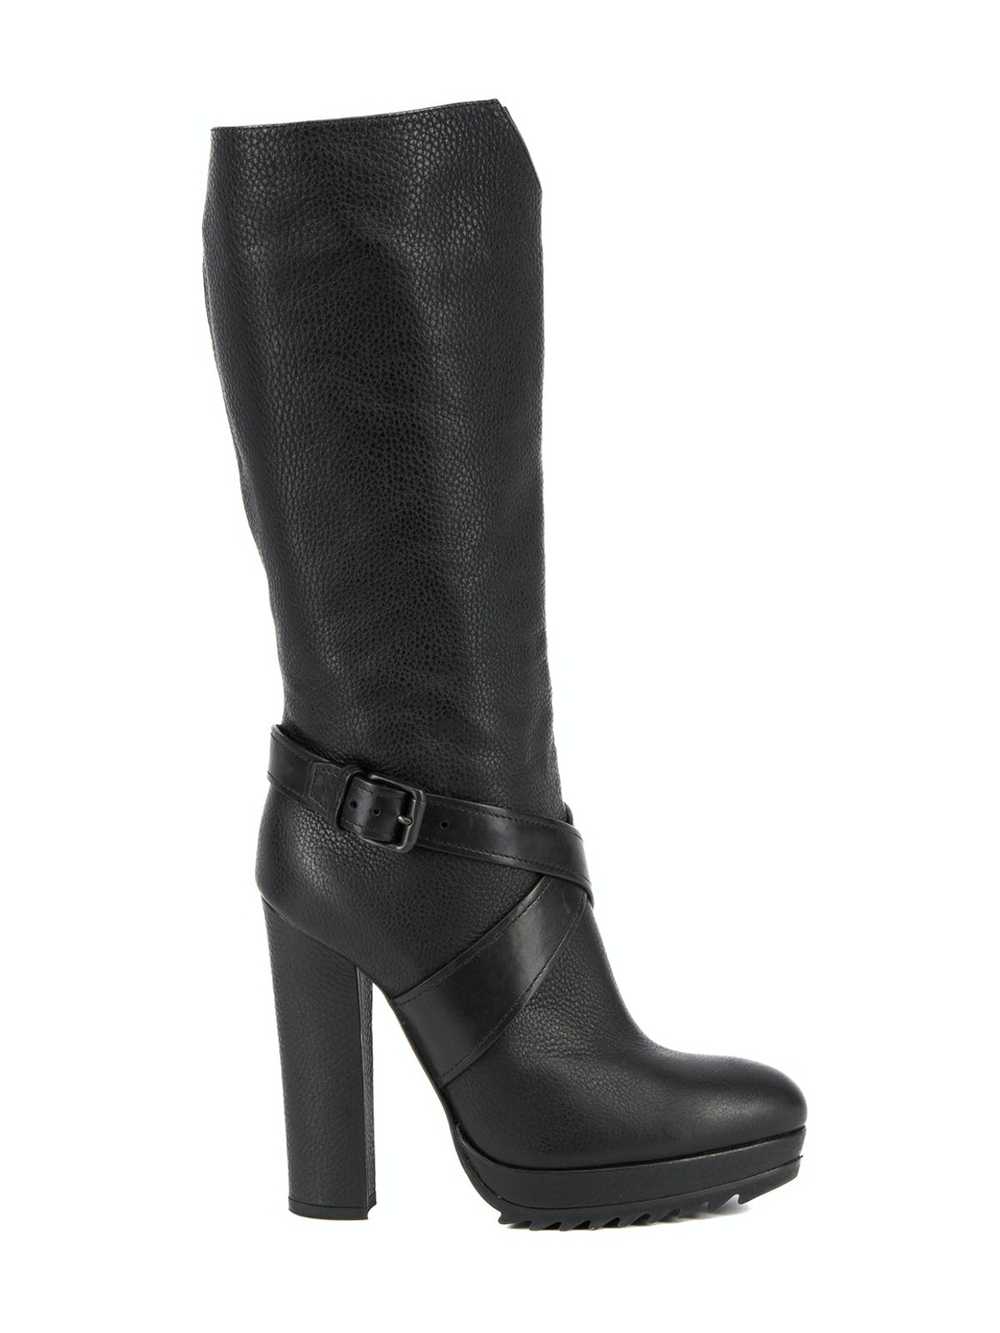 Bottega Veneta Knee High Boots with Buckle Detail - image 1